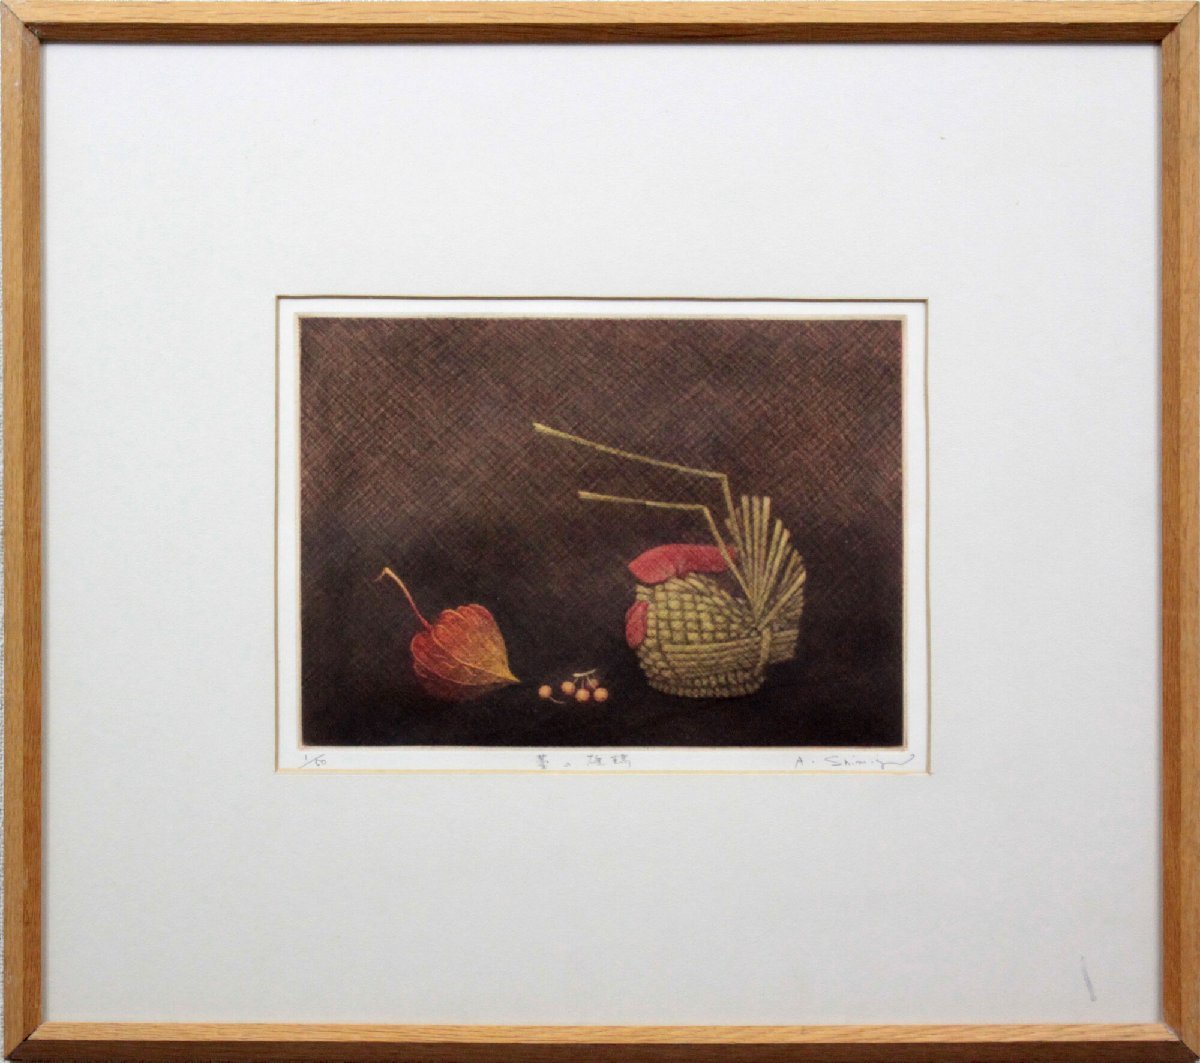 शिमिज़ु अत्सुशी रोस्टर ऑफ़ स्ट्रॉ कॉपरप्लेट प्रिंट [प्रामाणिक गारंटी] पेंटिंग - होक्काइडो गैलरी, कलाकृति, प्रिंटों, ताम्रपत्र उत्कीर्णन, एचिंग